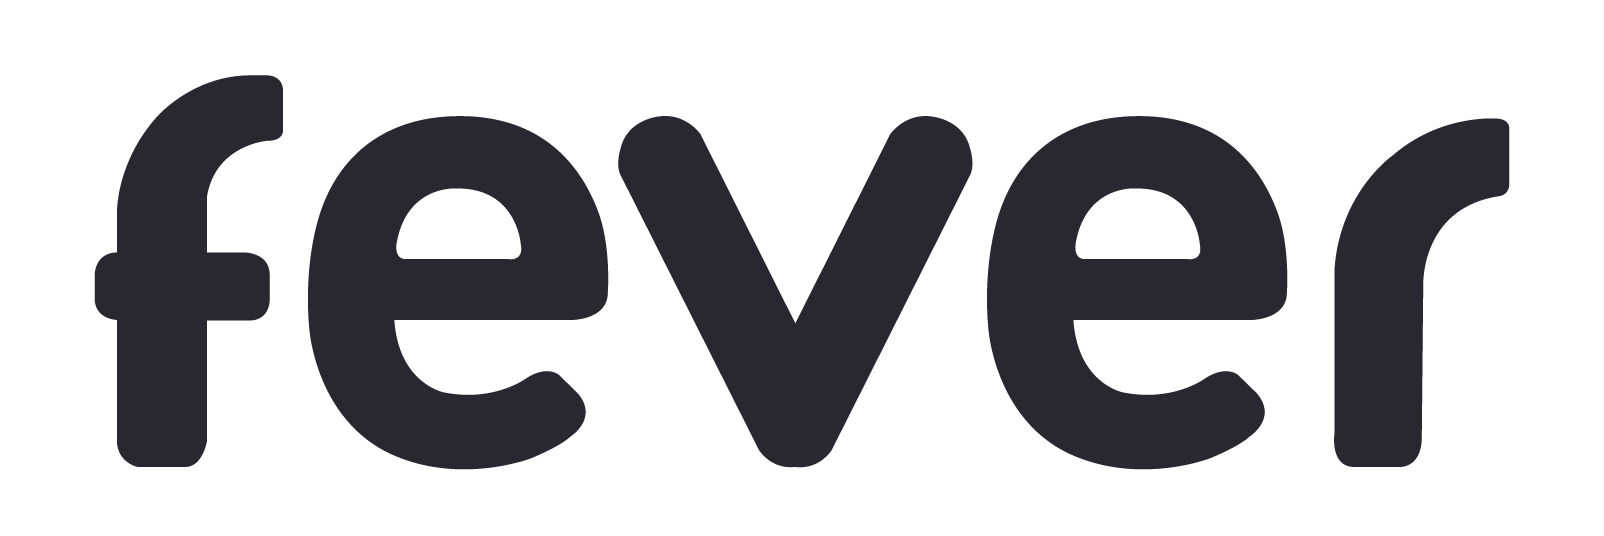 Fever Logo - LogoDix